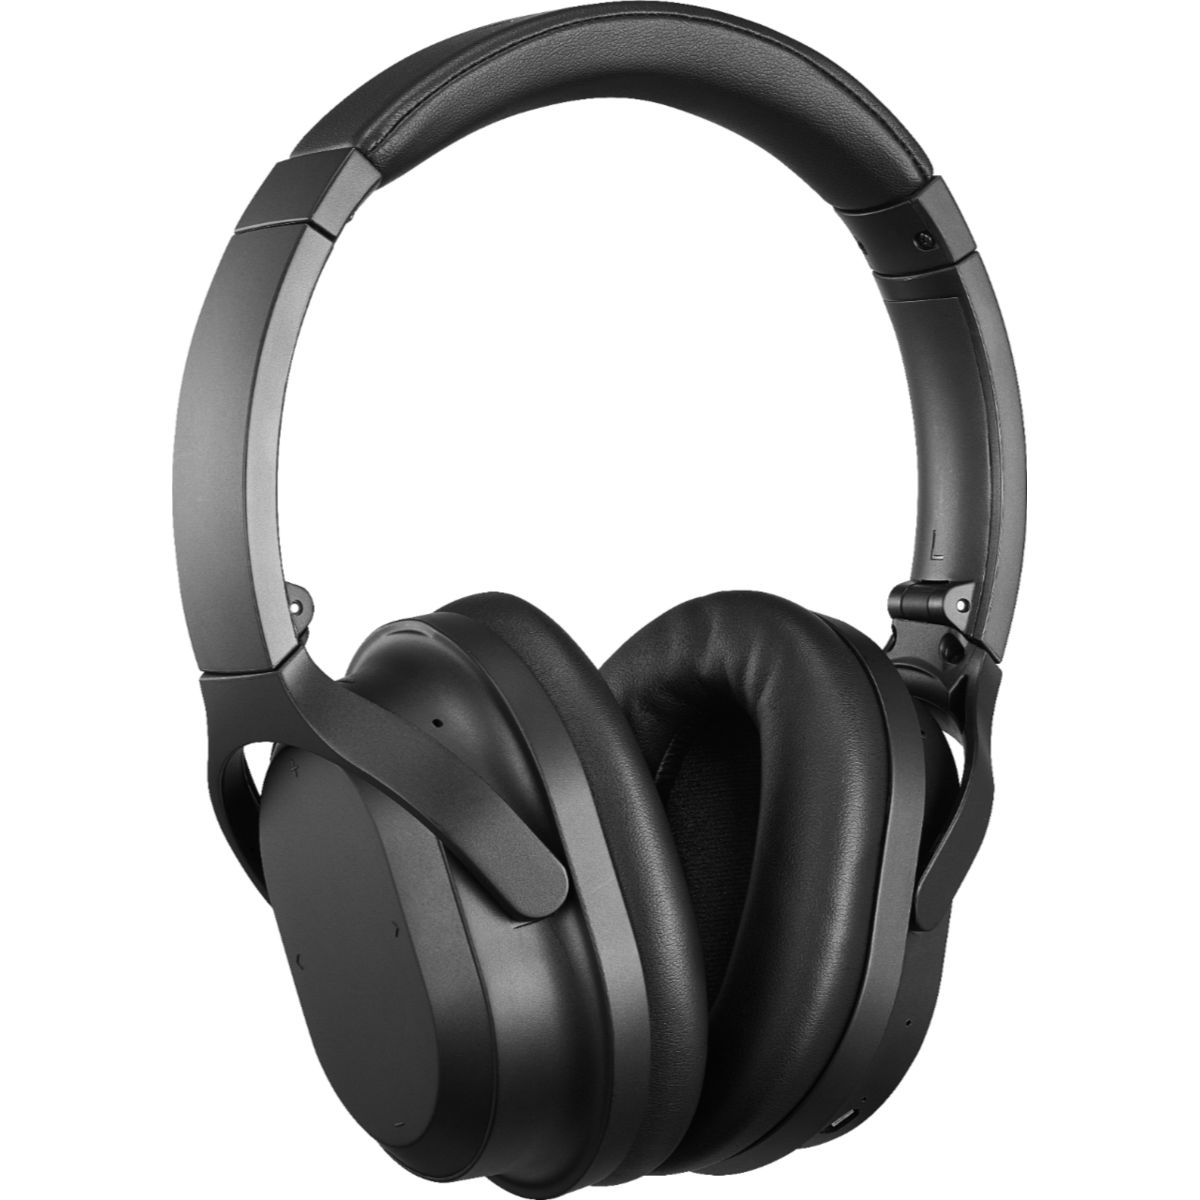 Insignia NS-AHBTOENC Wireless Noise Canceling Over-the-Ear Headphones